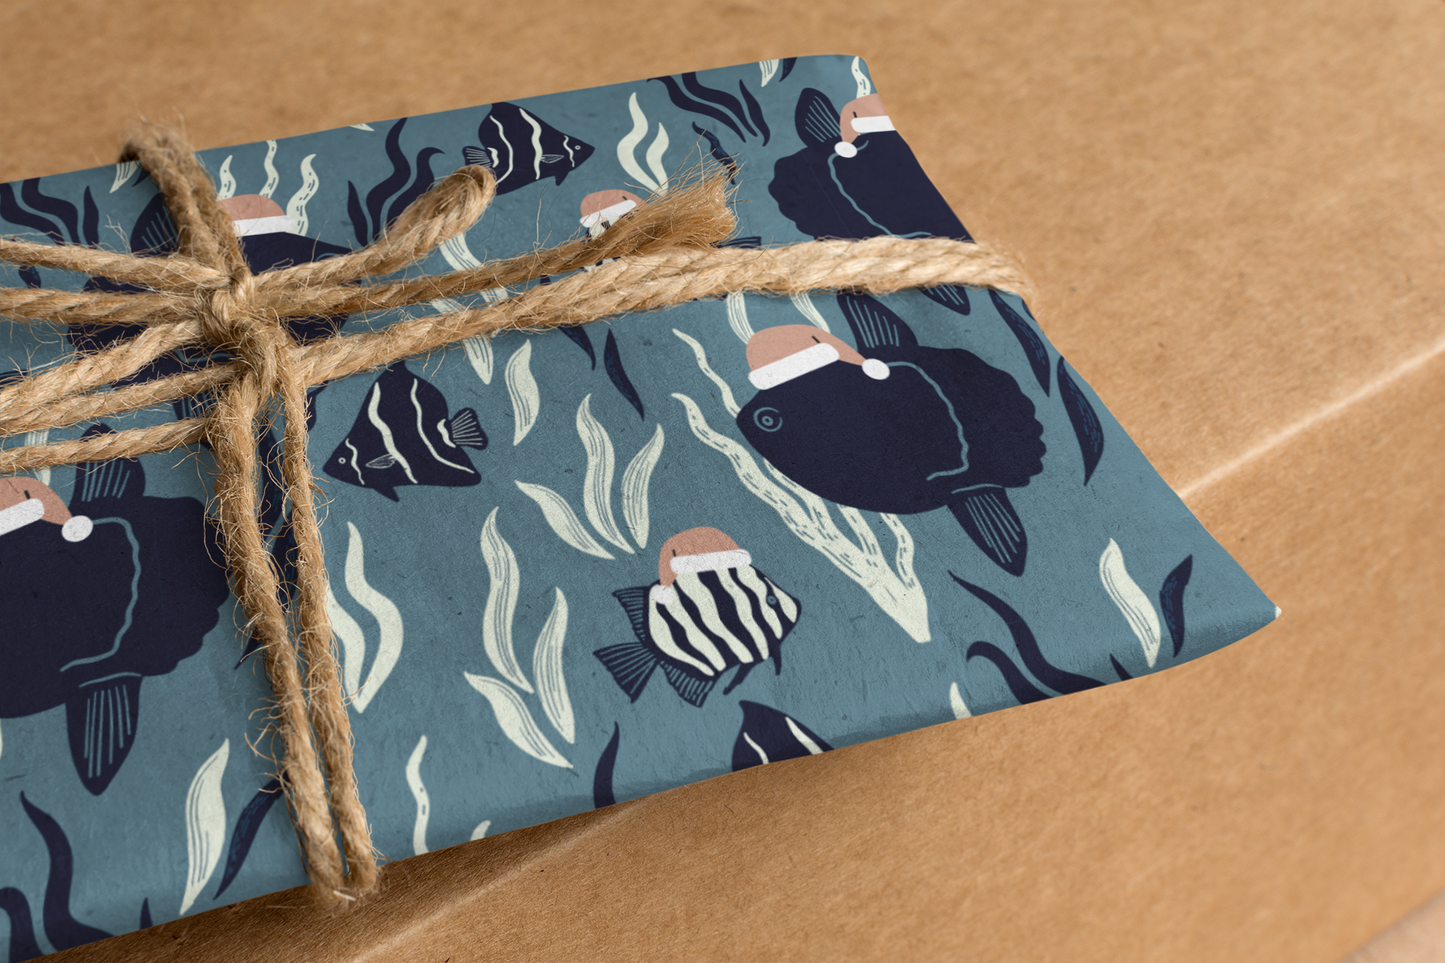 Santa Sunfish Eco-friendly Wrapping Paper